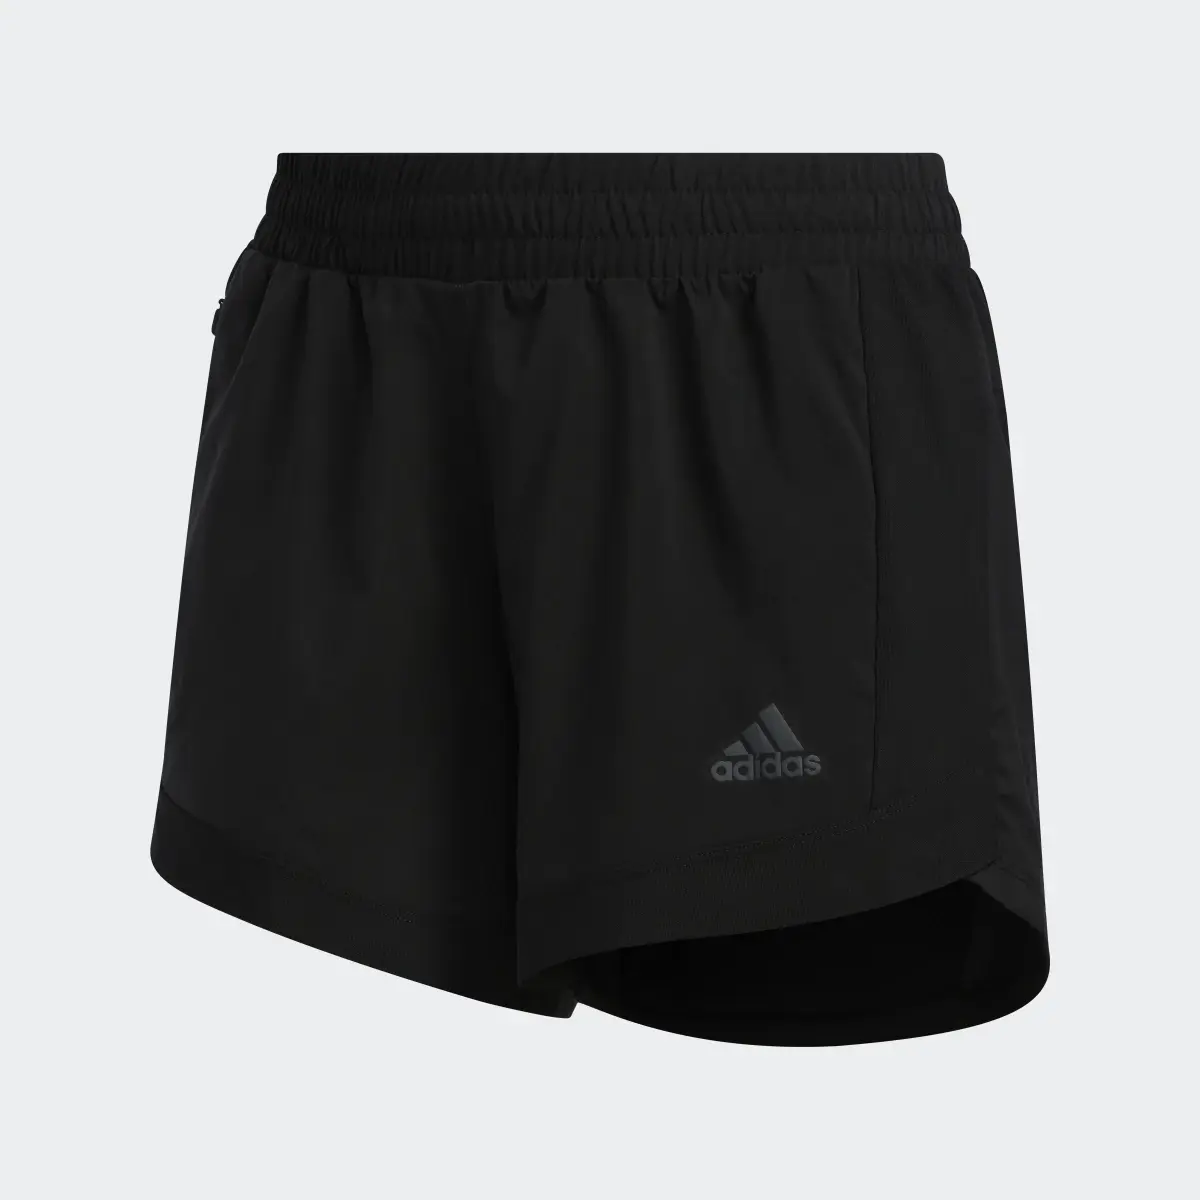 Adidas Shorts Mesh. 1